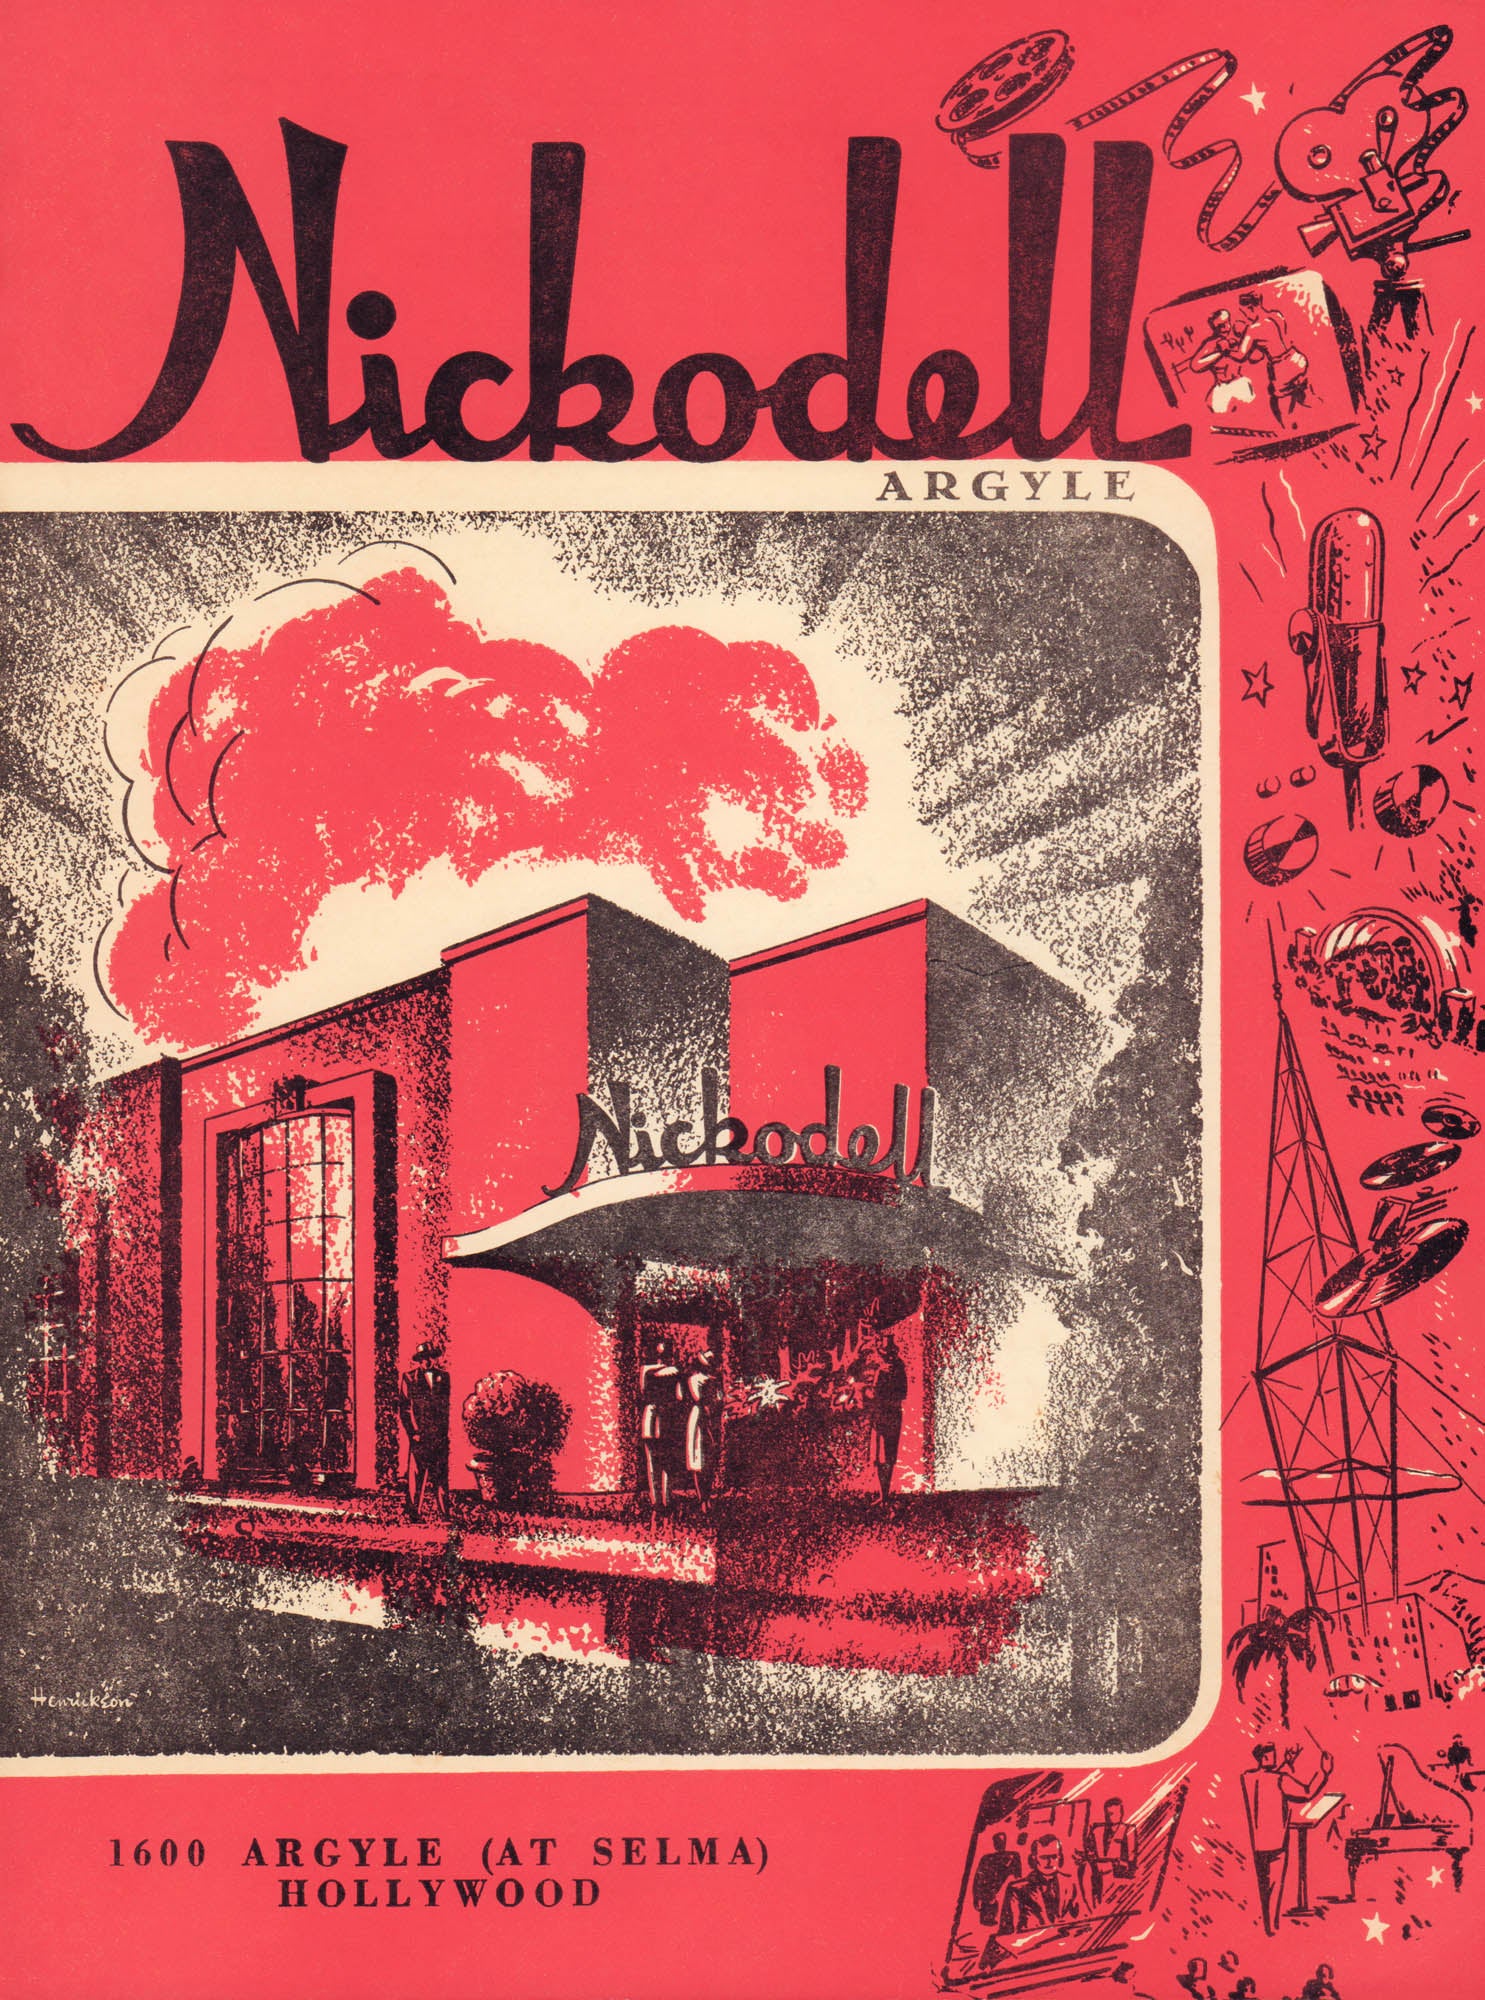 Nickodell, Hollywood 1956 menu art